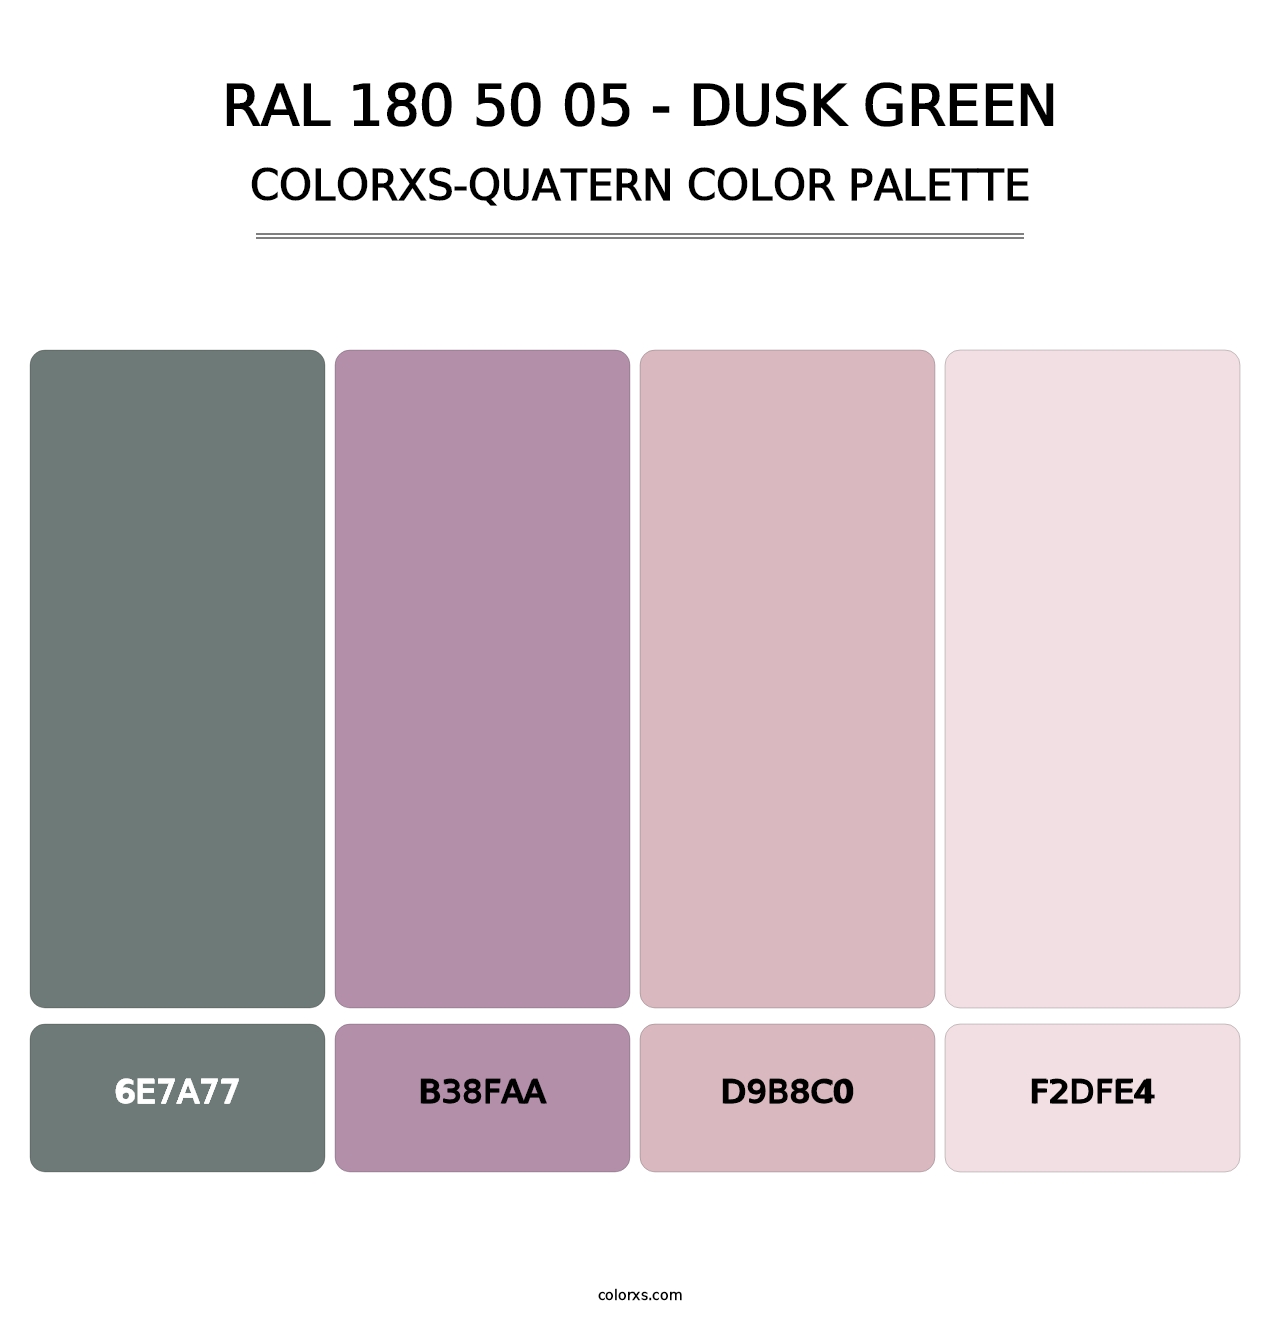 RAL 180 50 05 - Dusk Green - Colorxs Quatern Palette